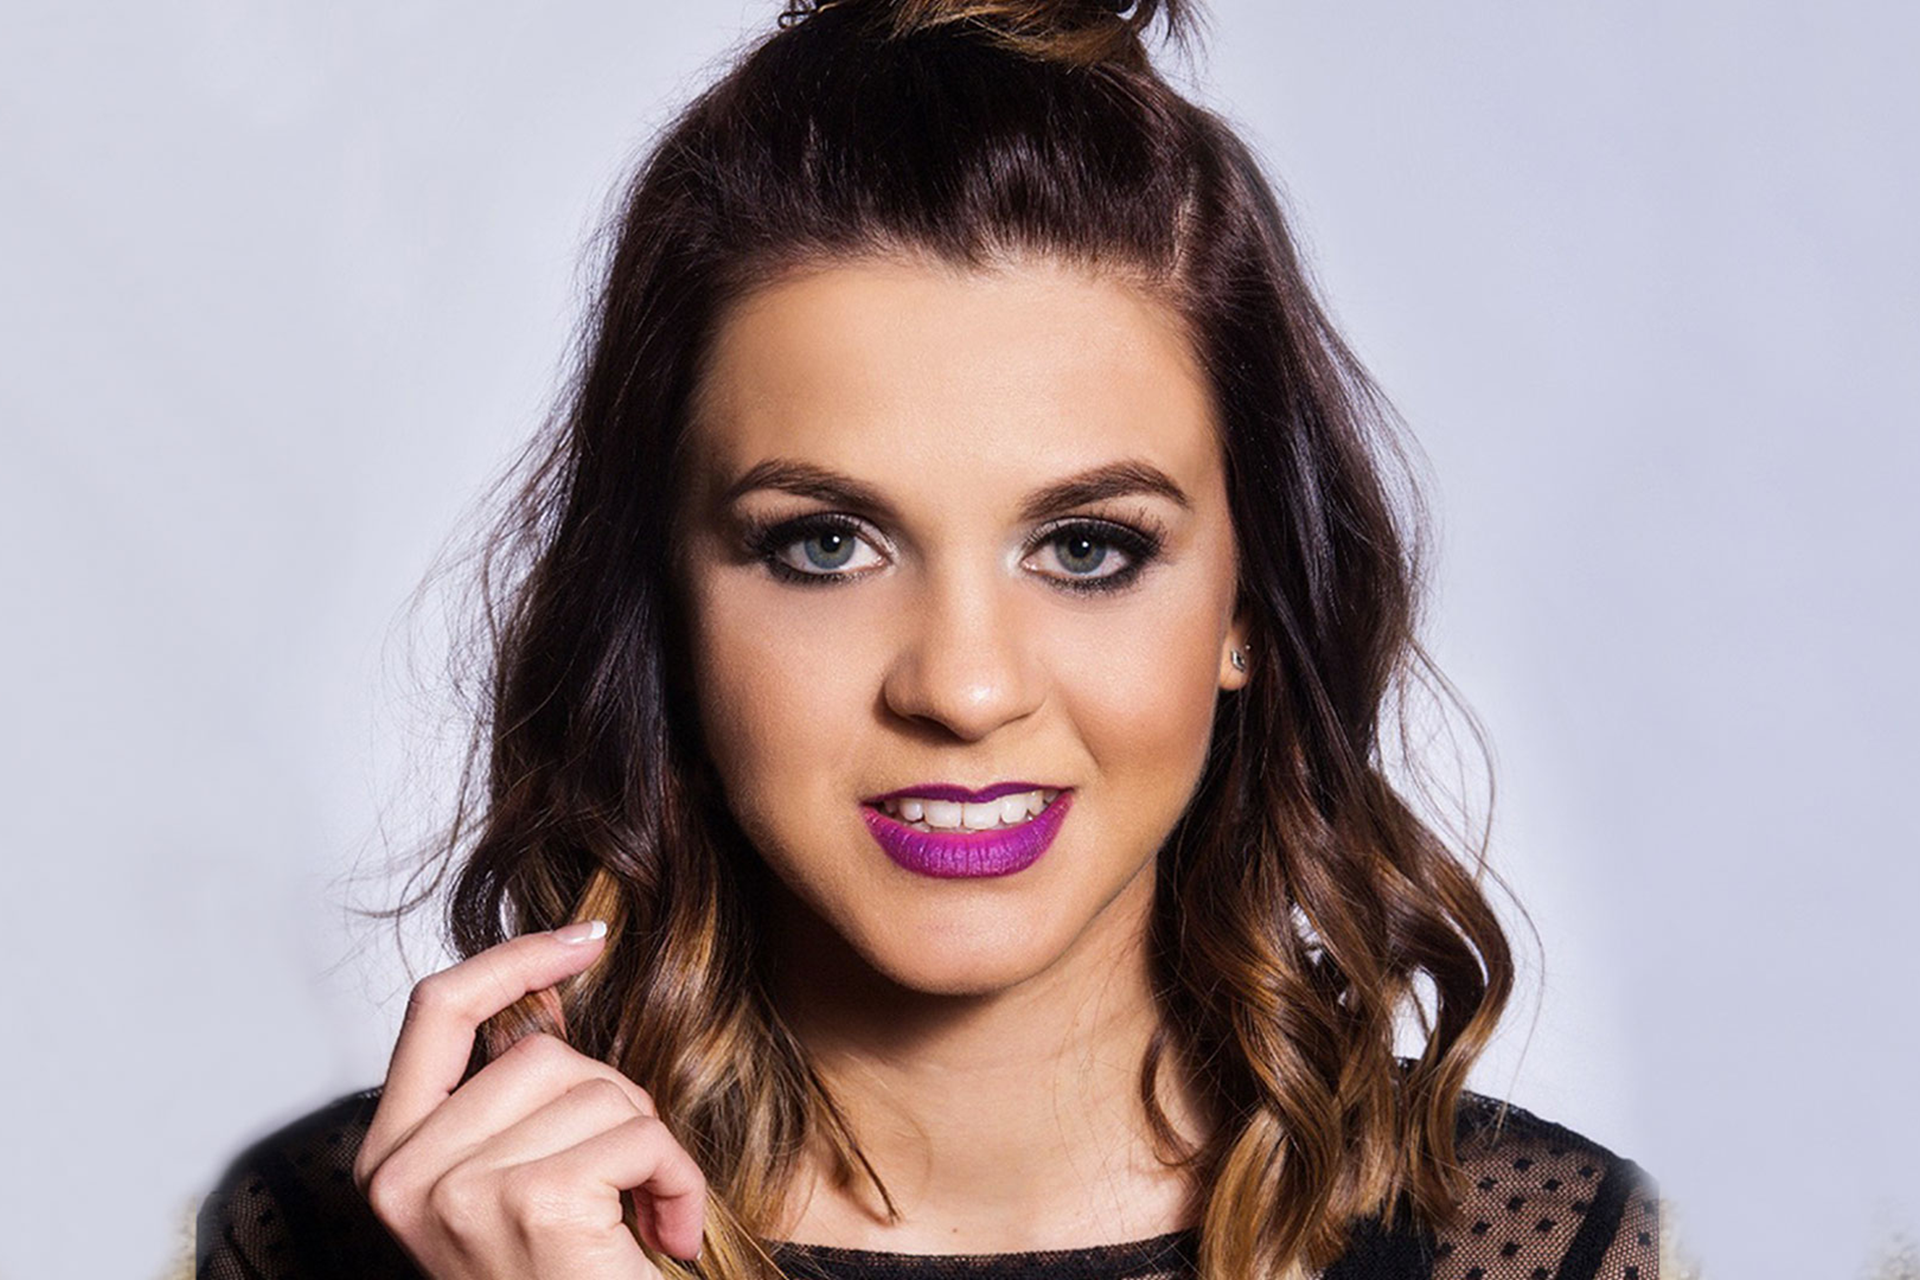 Headshot of Lauren Layfield wearing purple lipstick against a light grey background